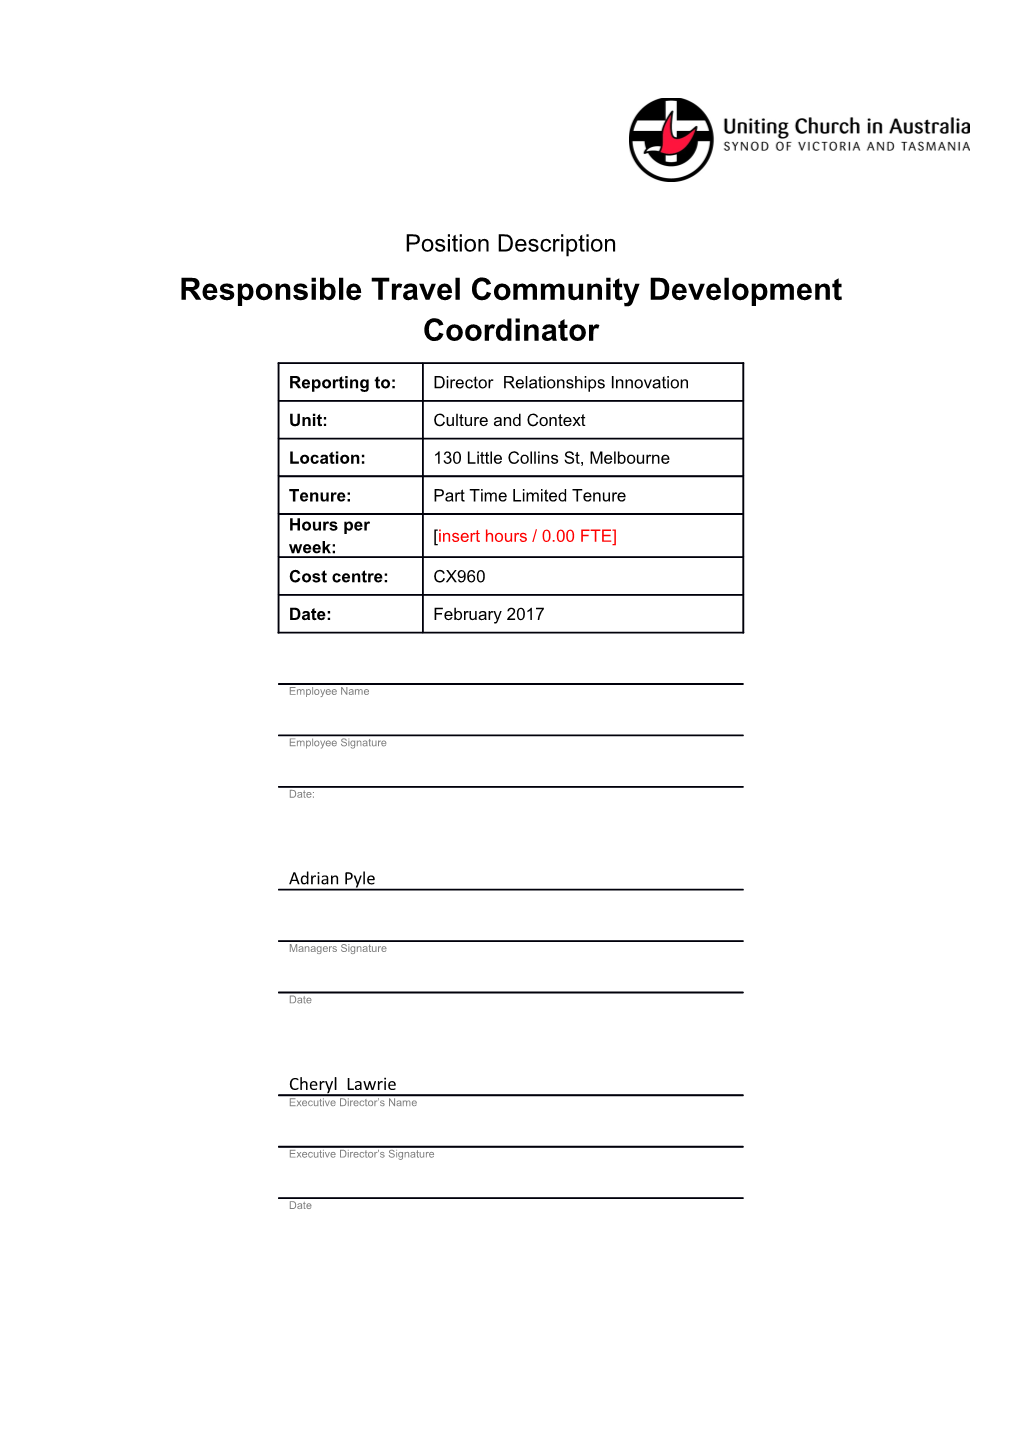 Responsible Travel Community Developmentcoordinator